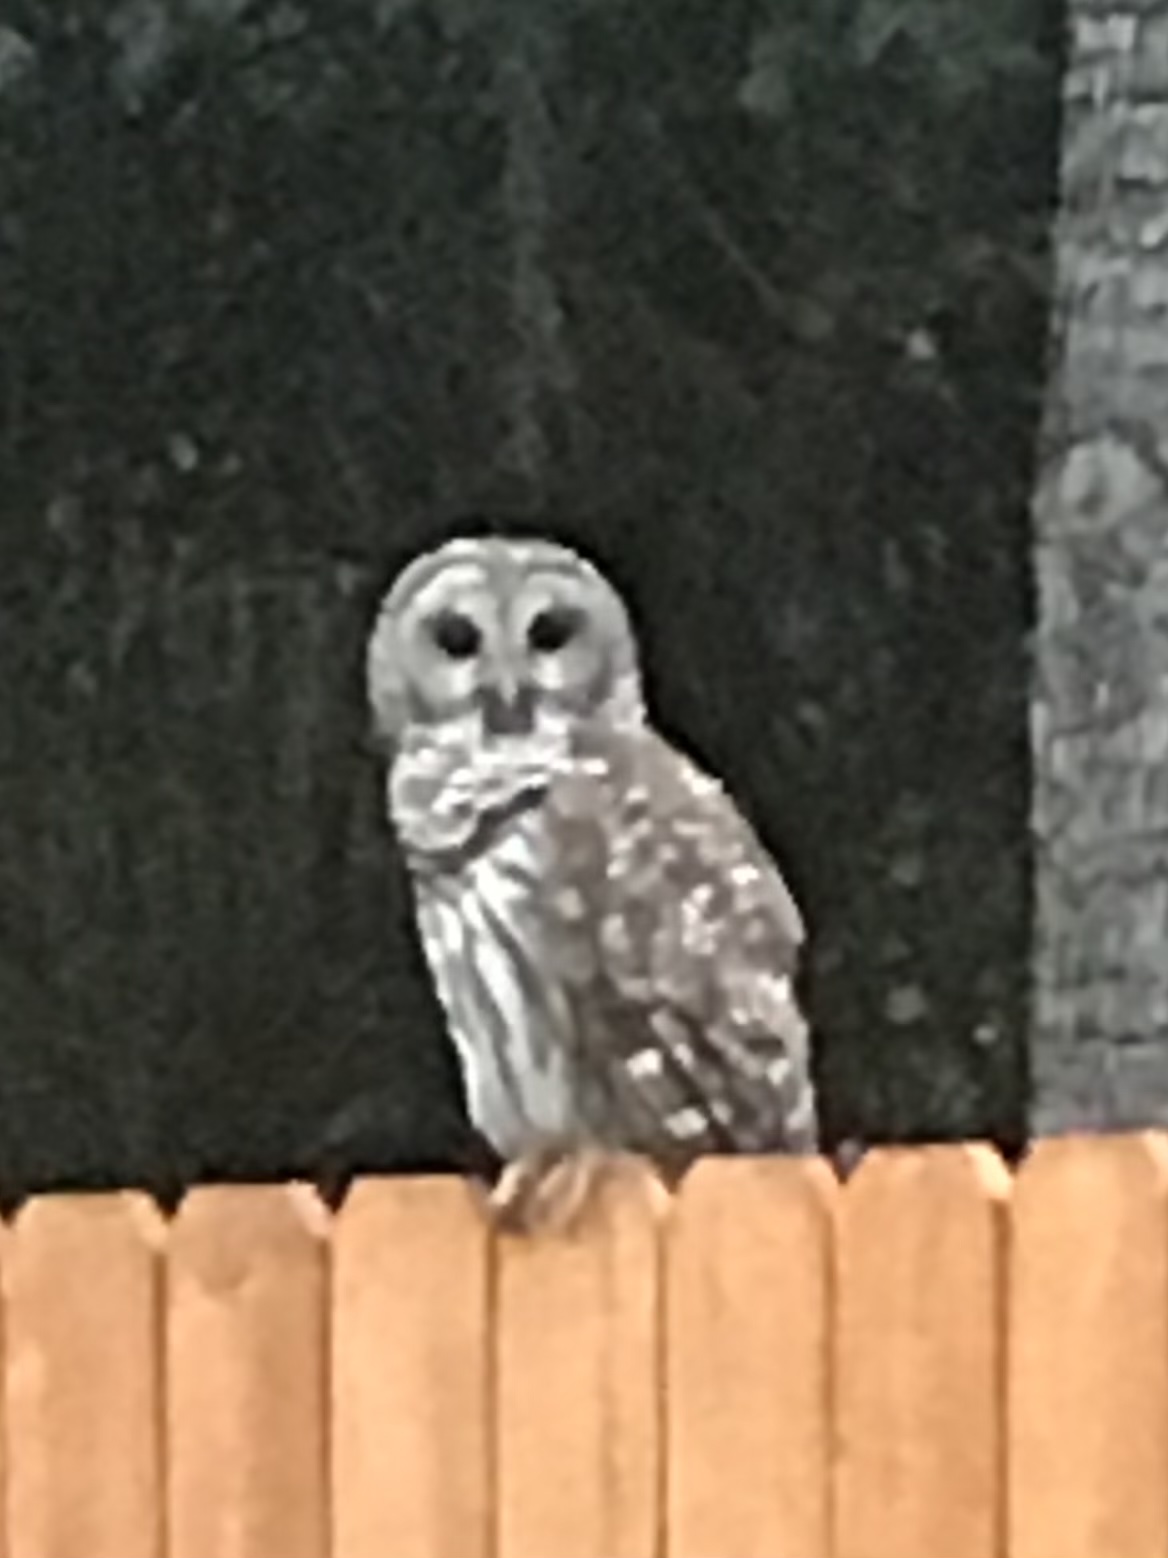 Barred Owl In Ocala Backyard